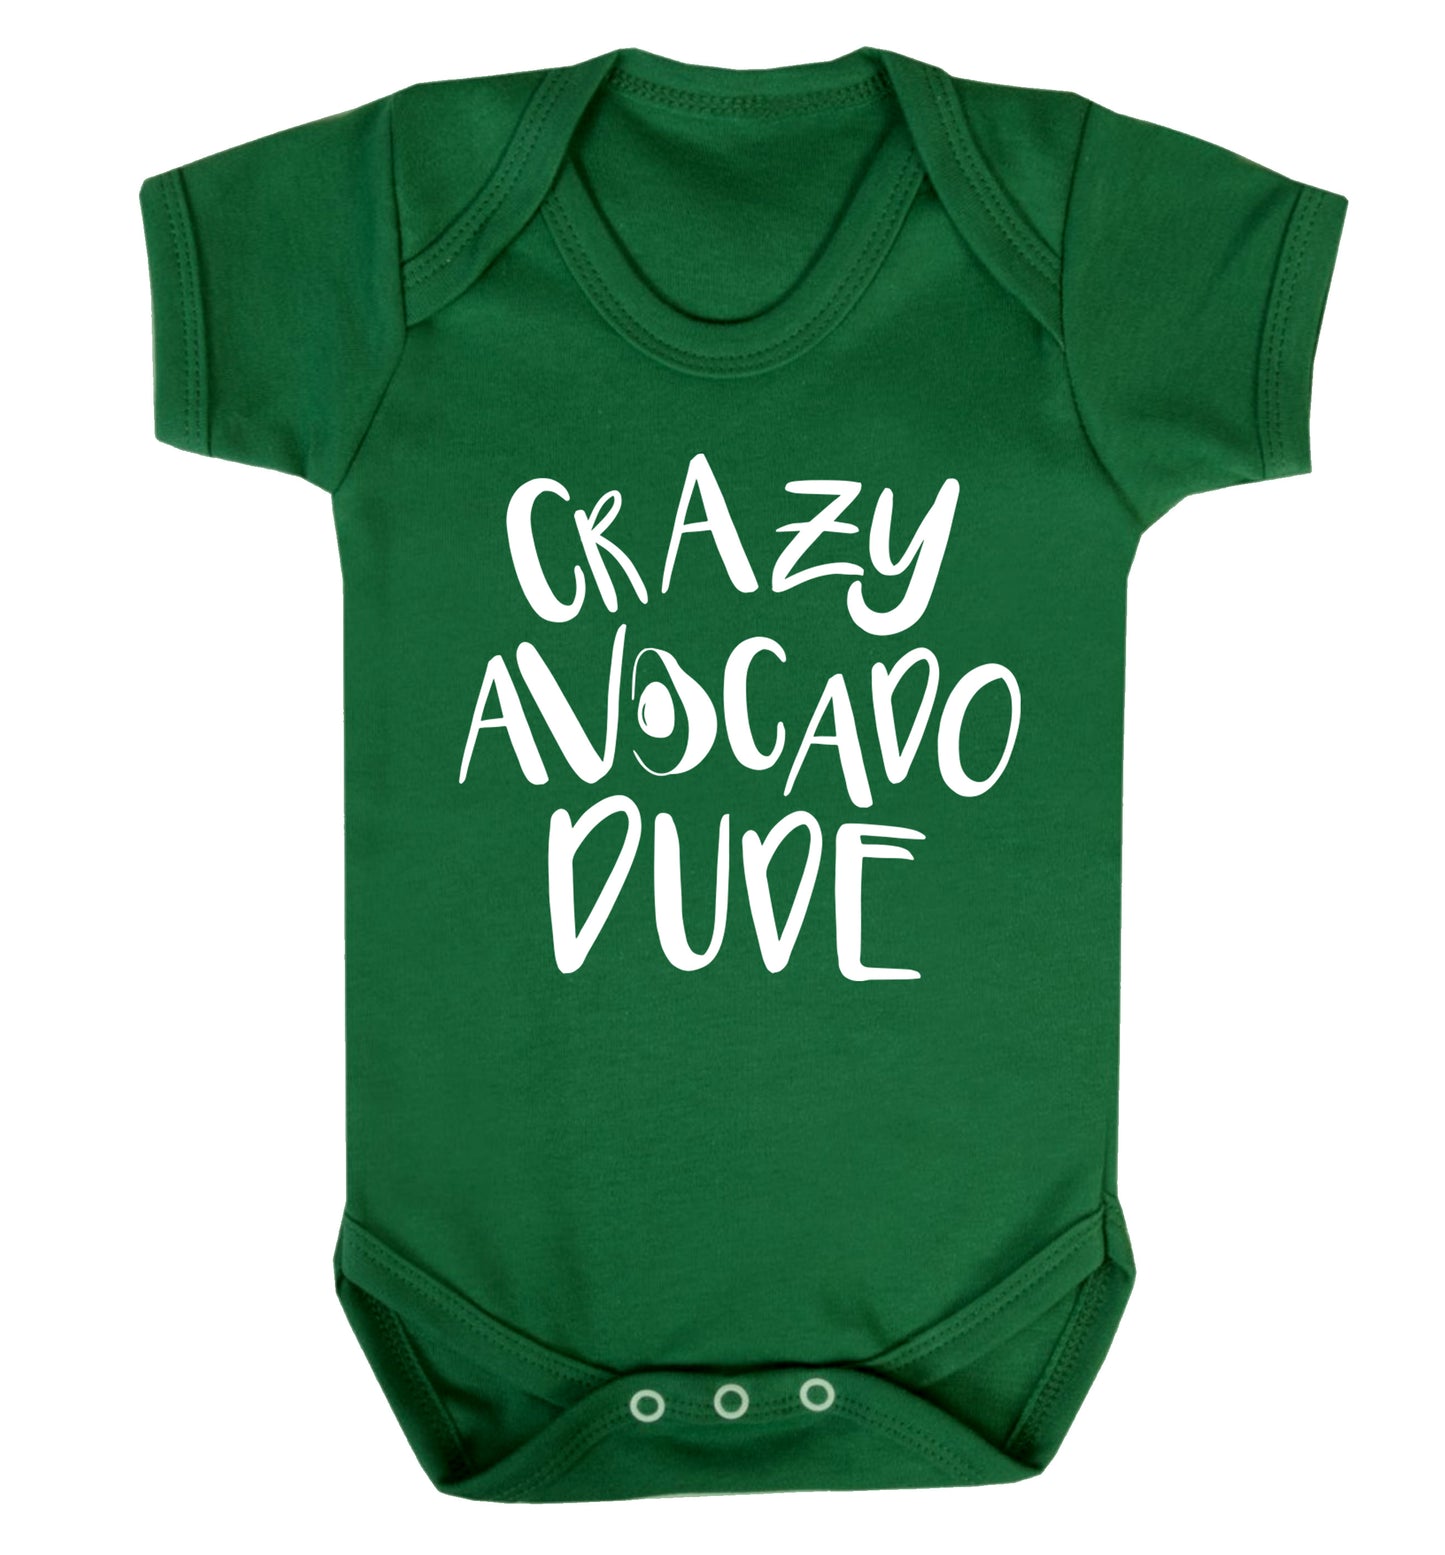 Crazy avocado dude Baby Vest green 18-24 months